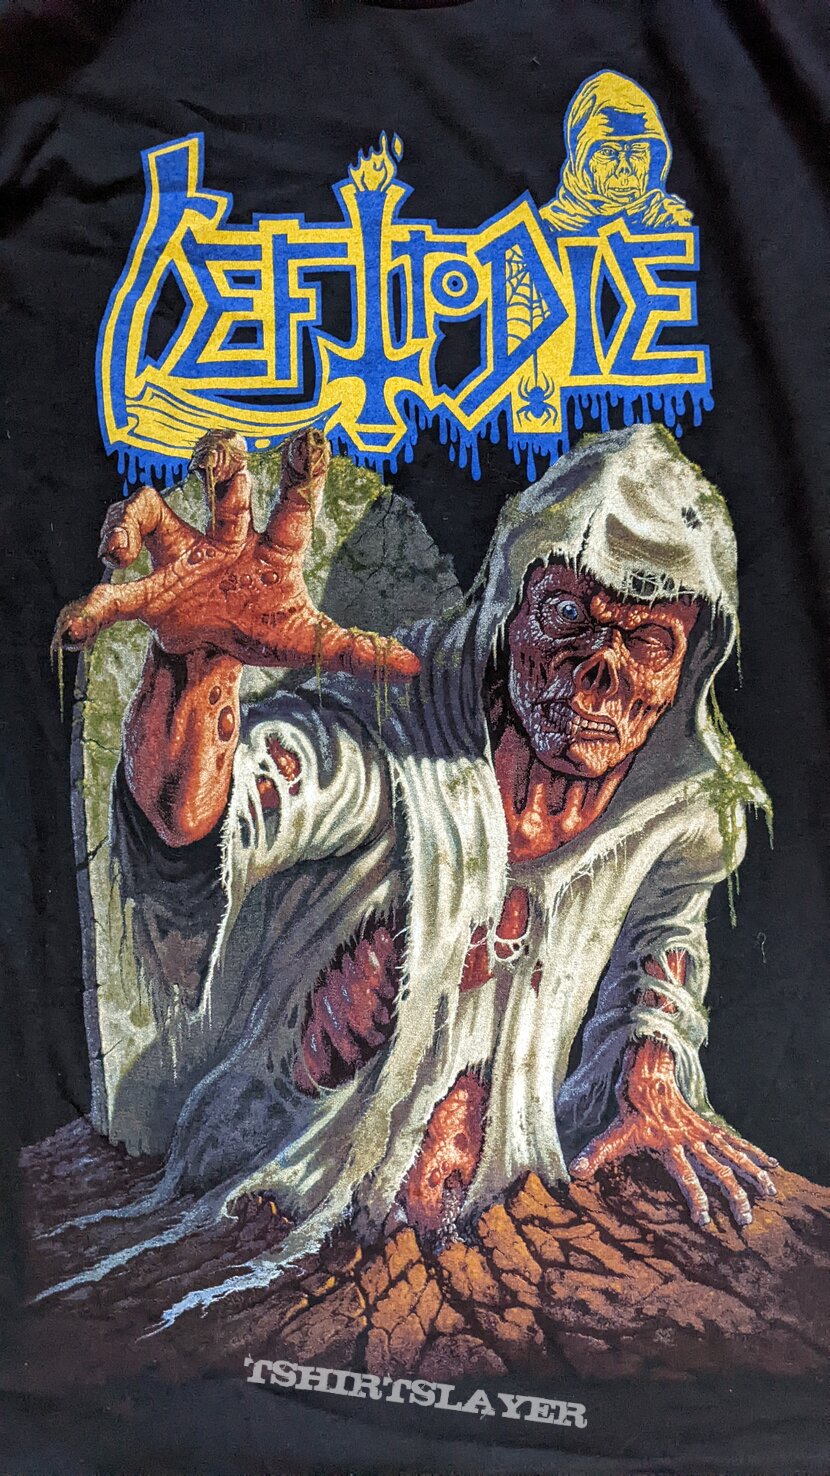 Left To Die (Death) - Reborn Dead US Tour 2022 longsleeve shirt